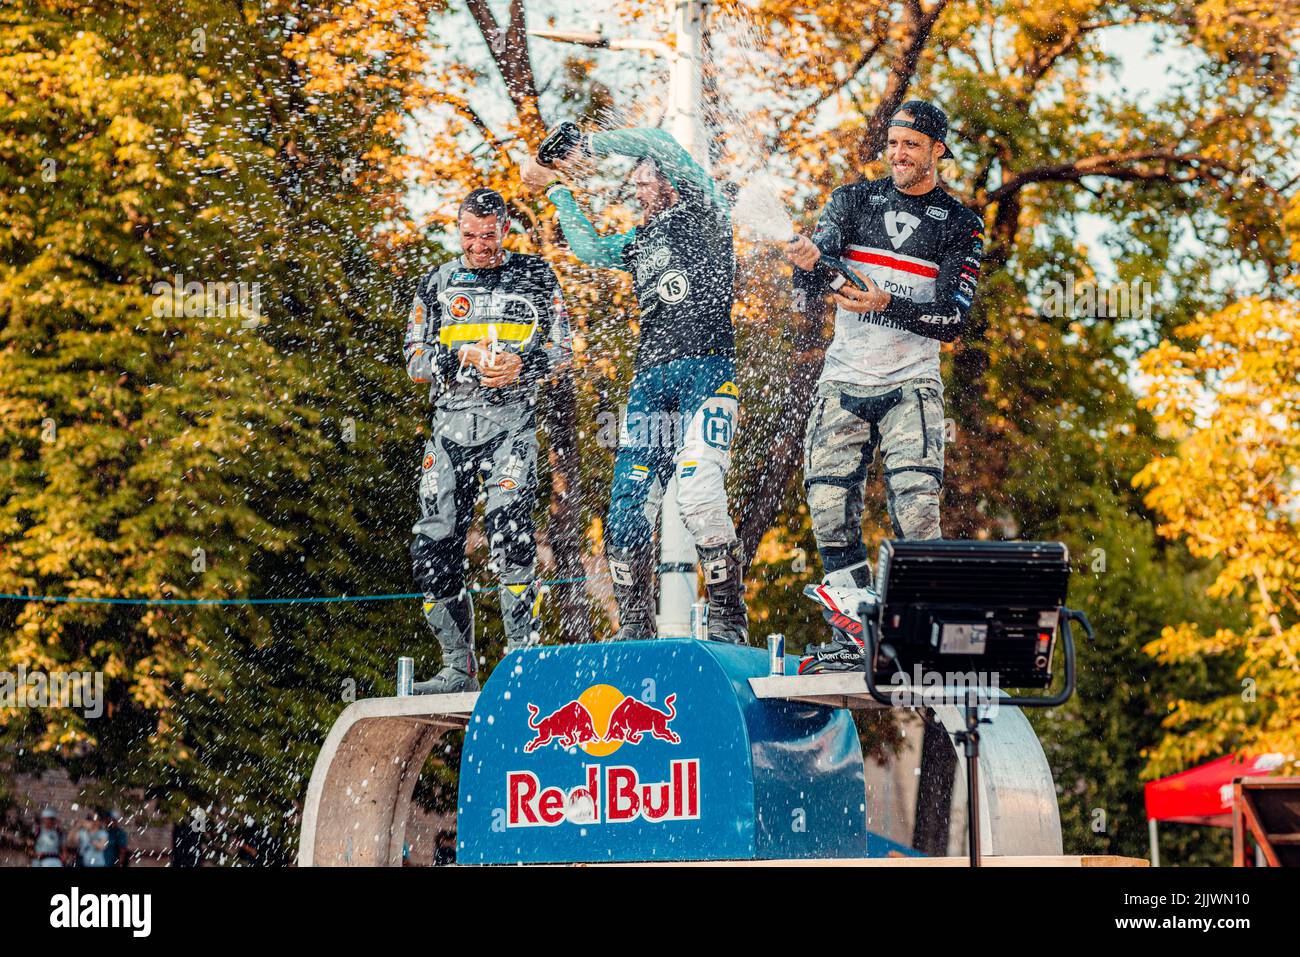 the winners celebrating their victory during Red Bull Romaniacs hard enduro Rallye - Prolog in Sibiu Stock Photo